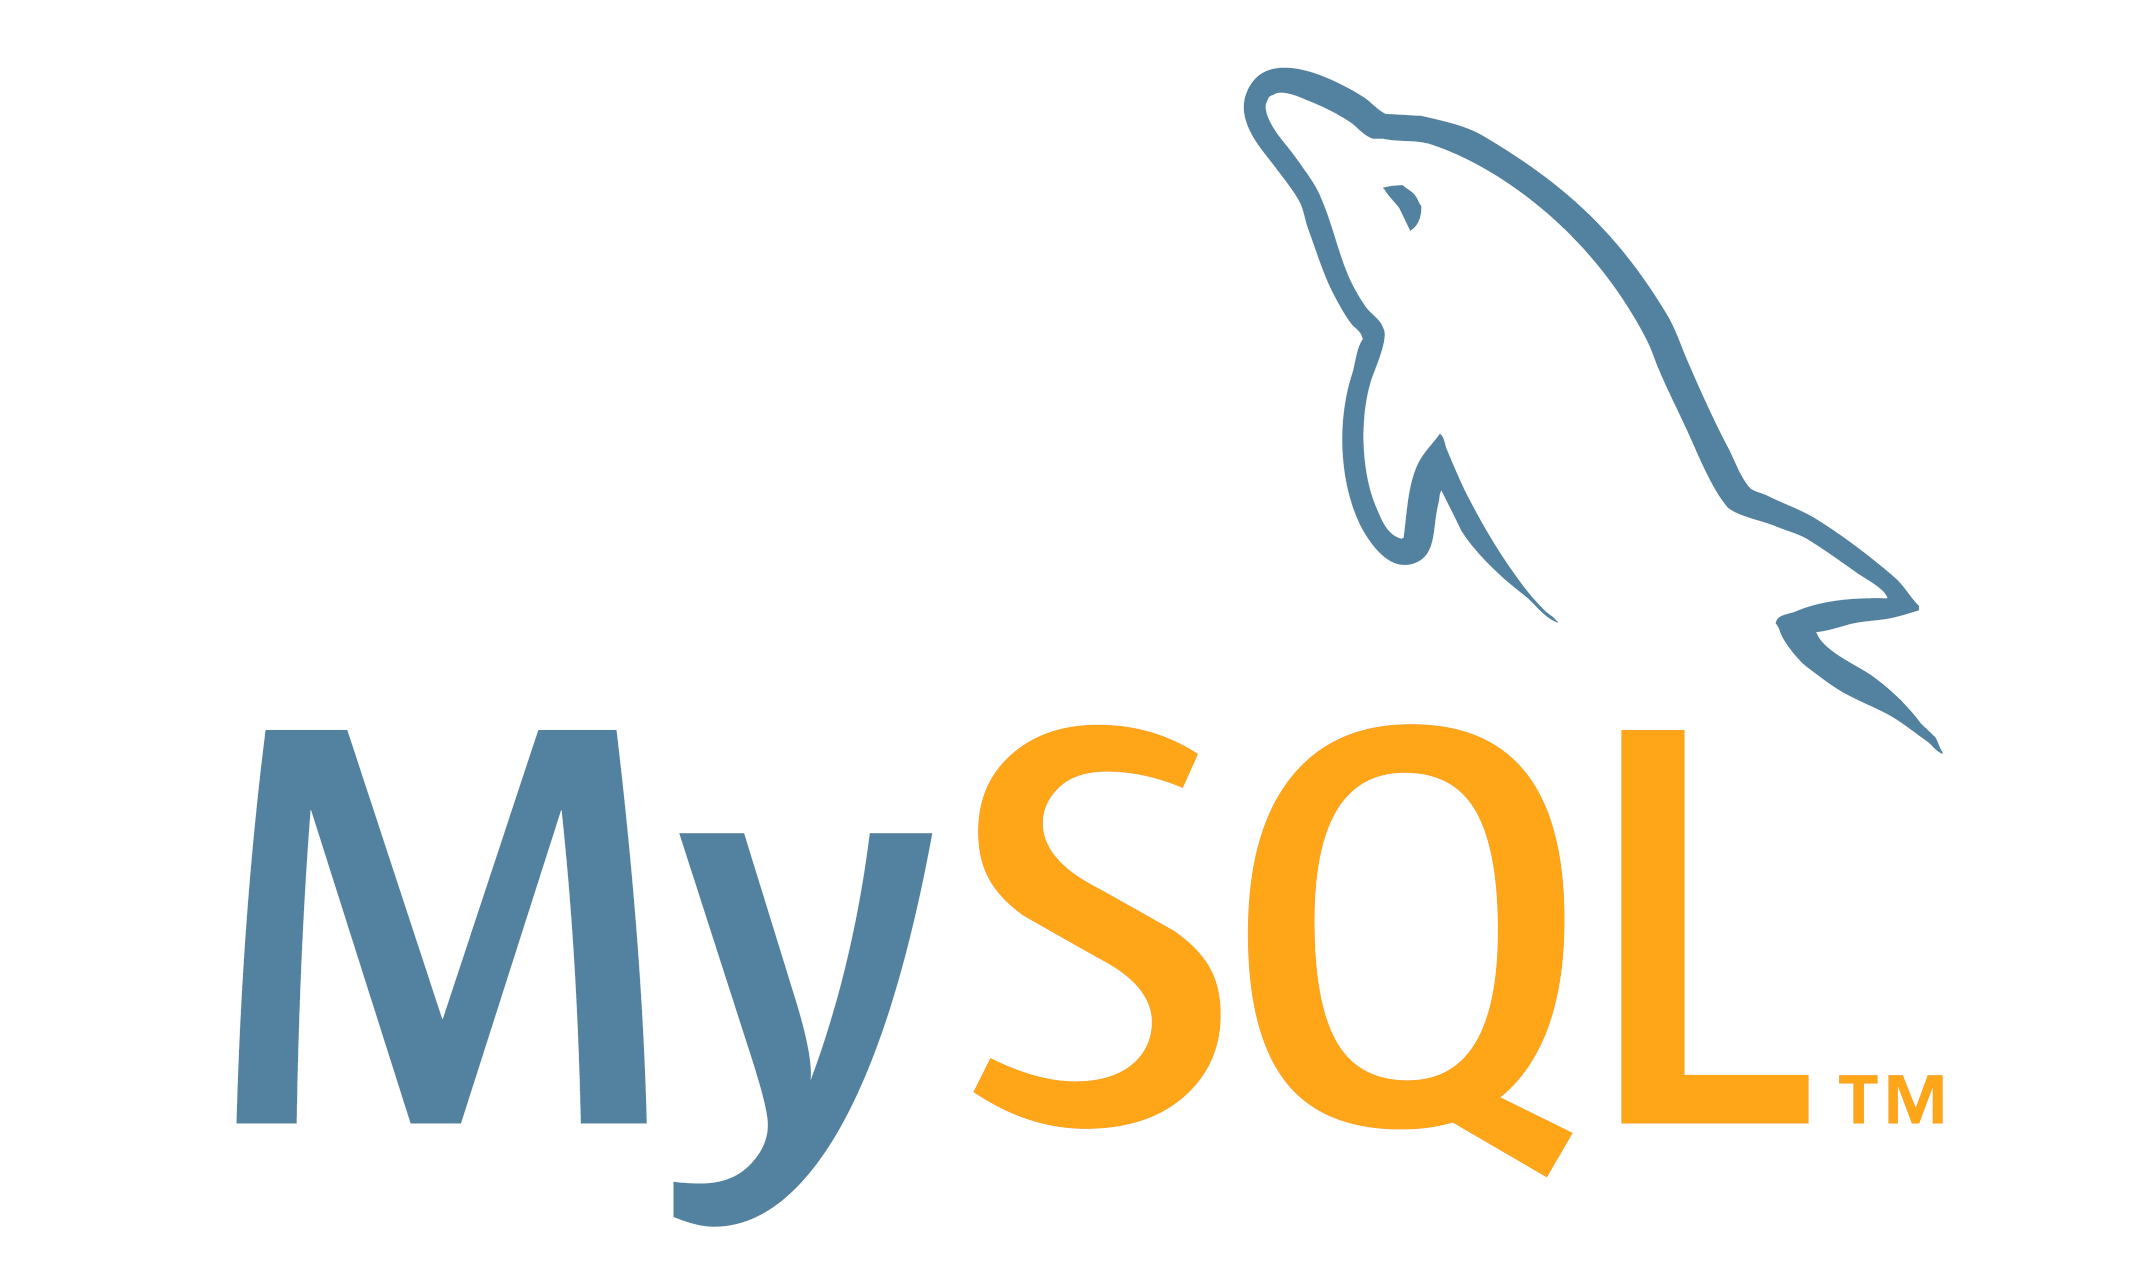 MySQL چگونه کار می کند